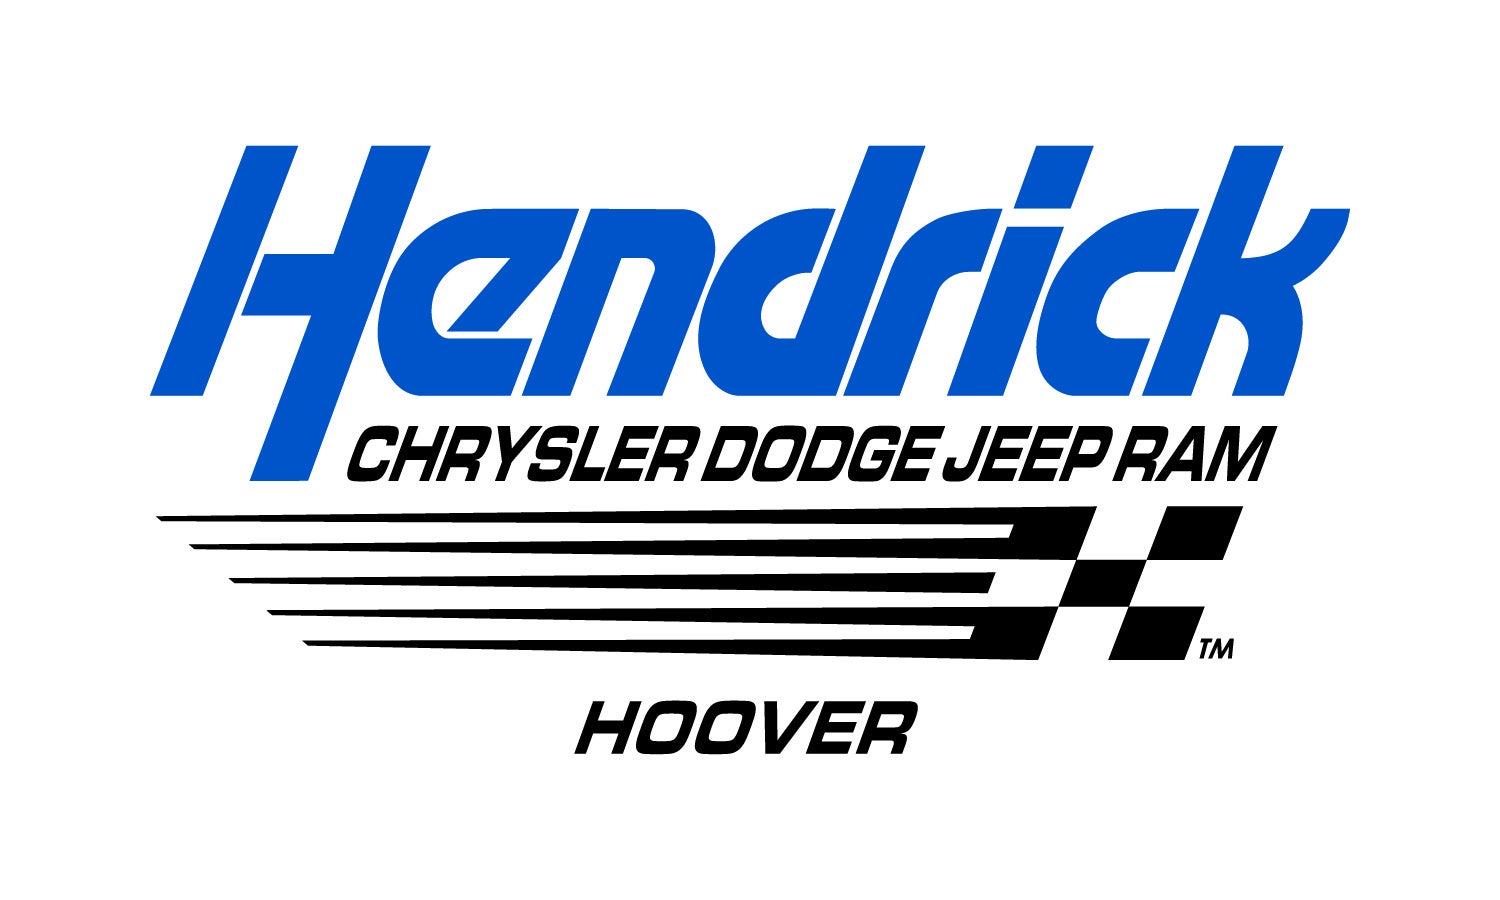 Hendrick Chrysler Dodge Jeep Ram Alabama